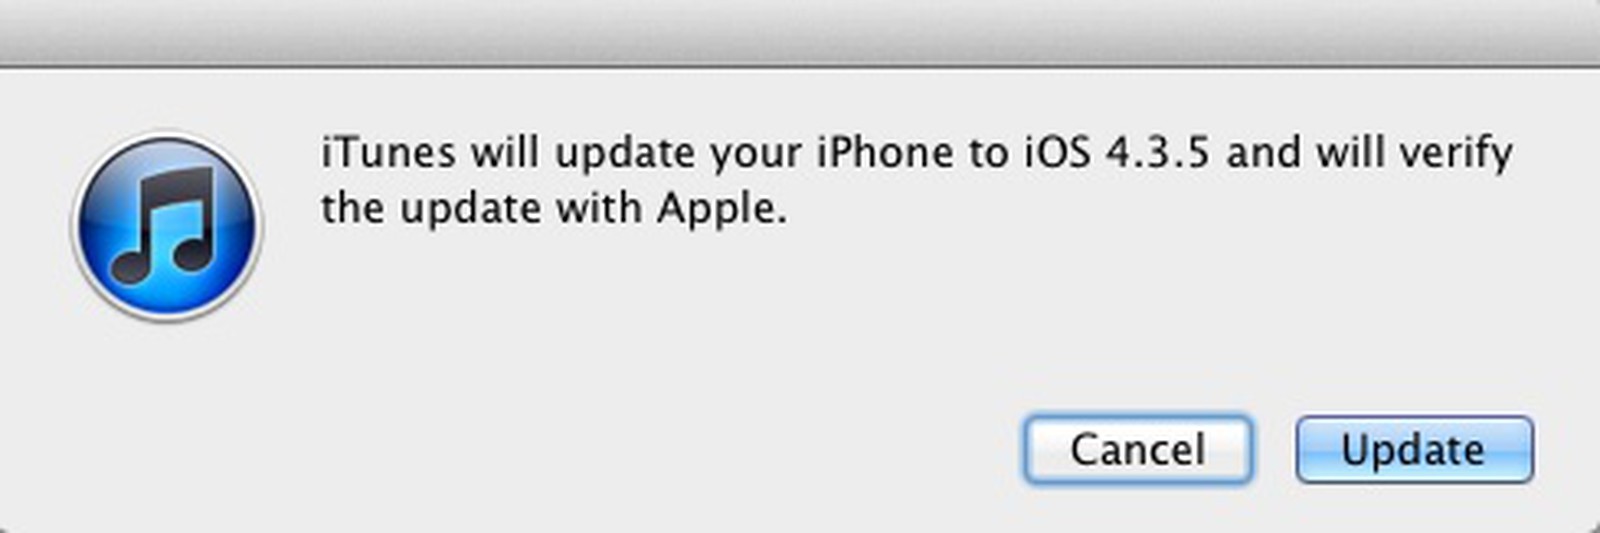 apple security update closes macs